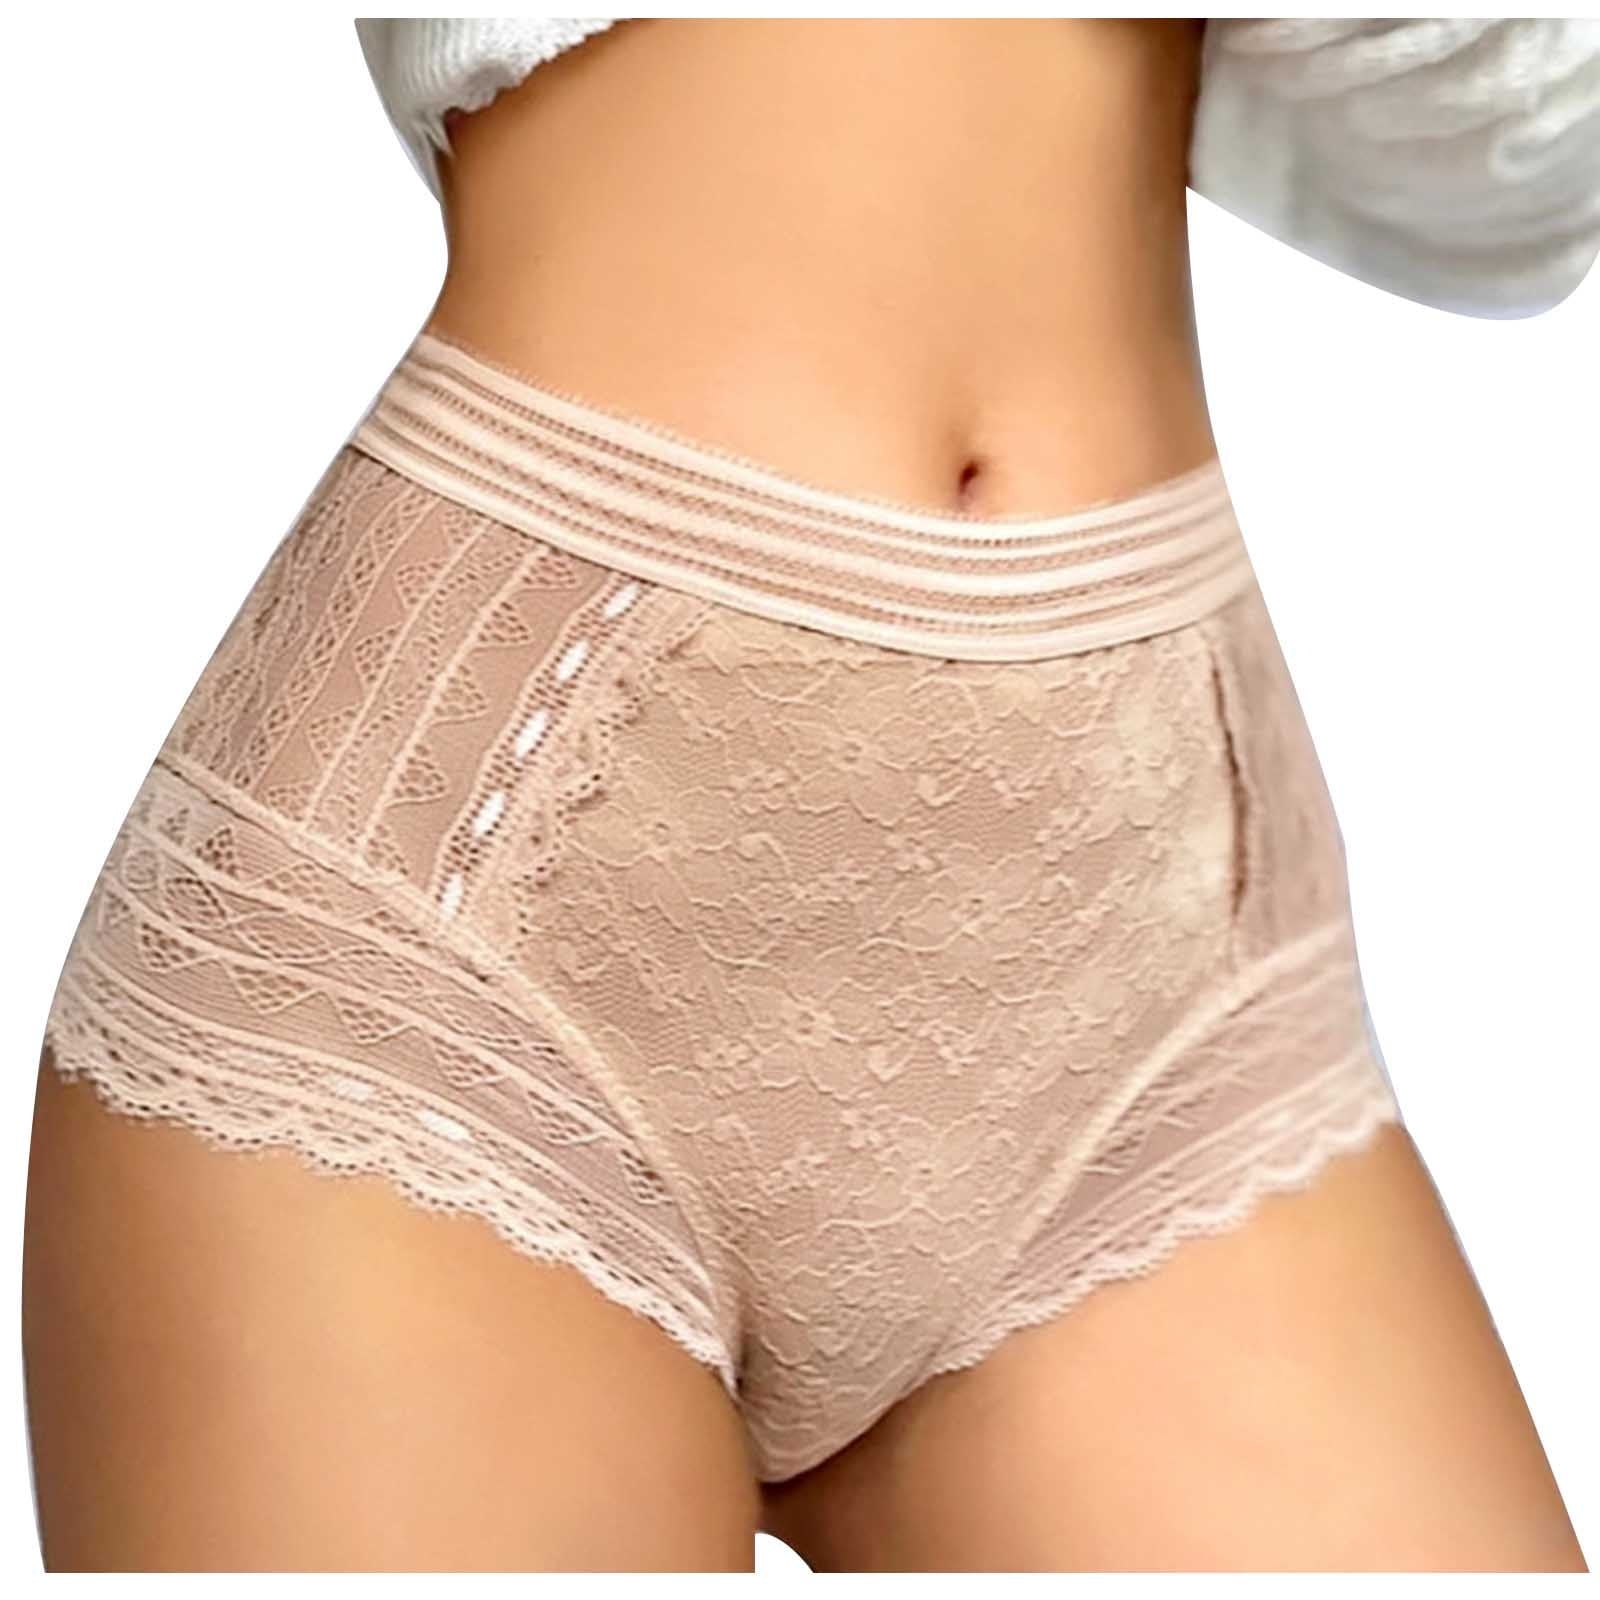 YWDJ Sleep Bras for Women Sexy Lace Women Solid Comfort Underwear Skin  Friendly Briefs Panty Intimates Black XXXL